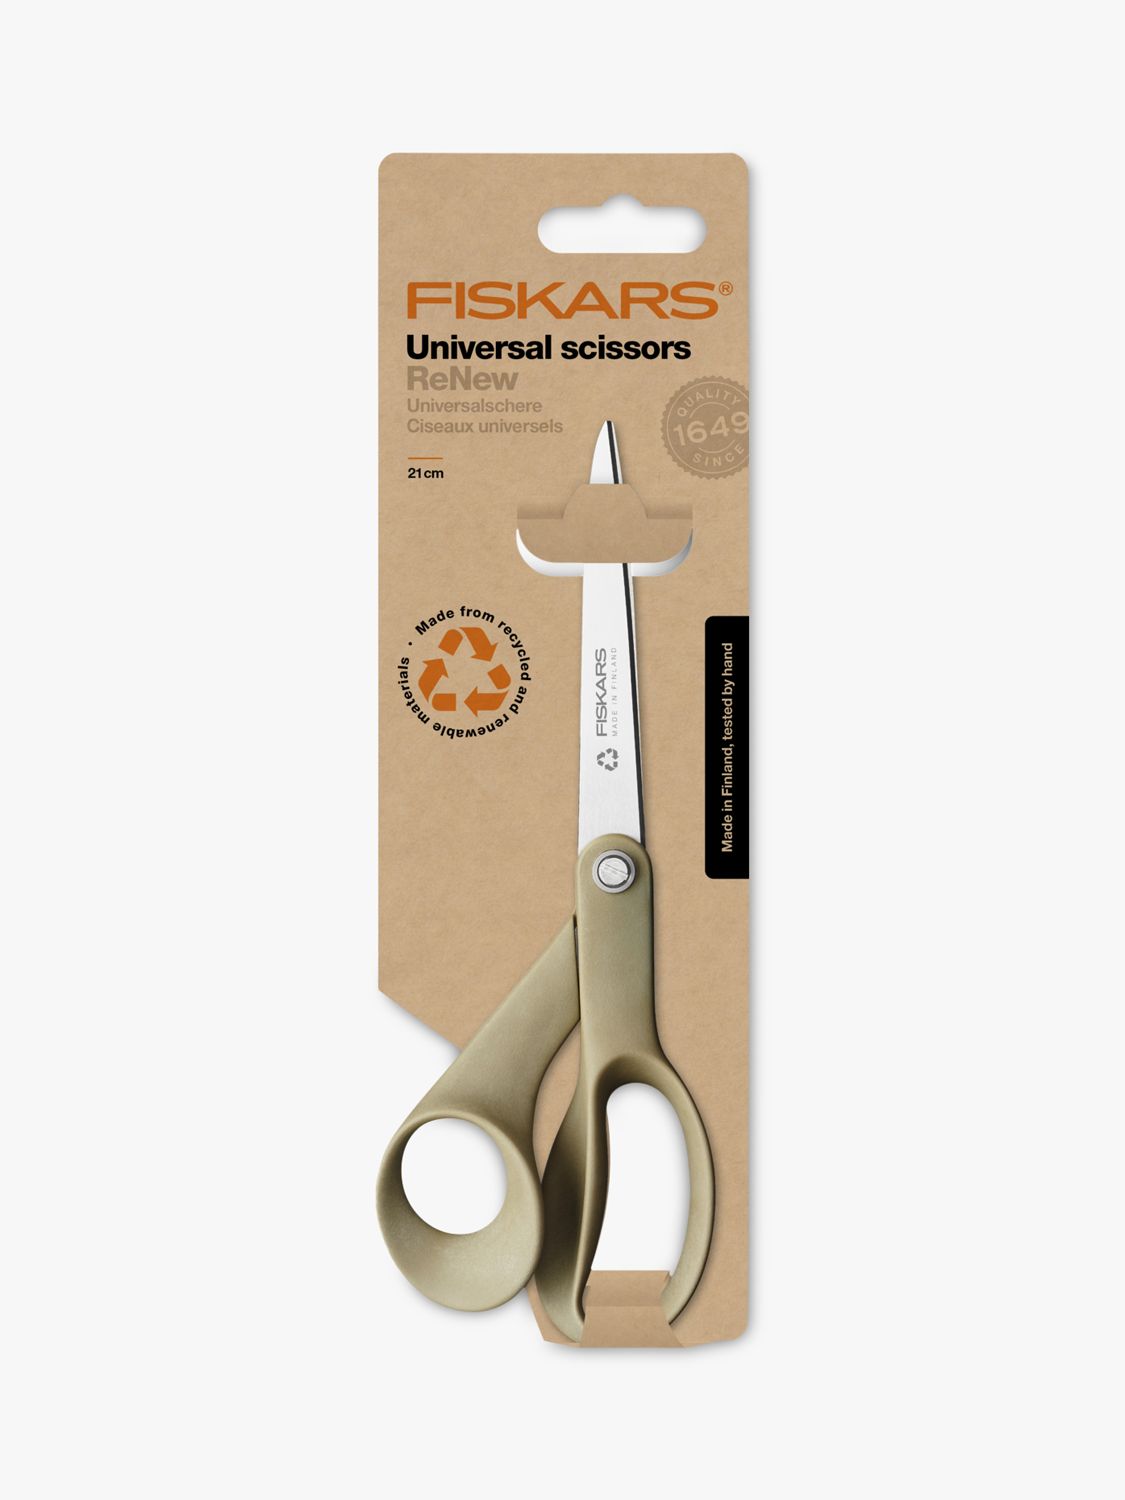 Fiskars Scissors at